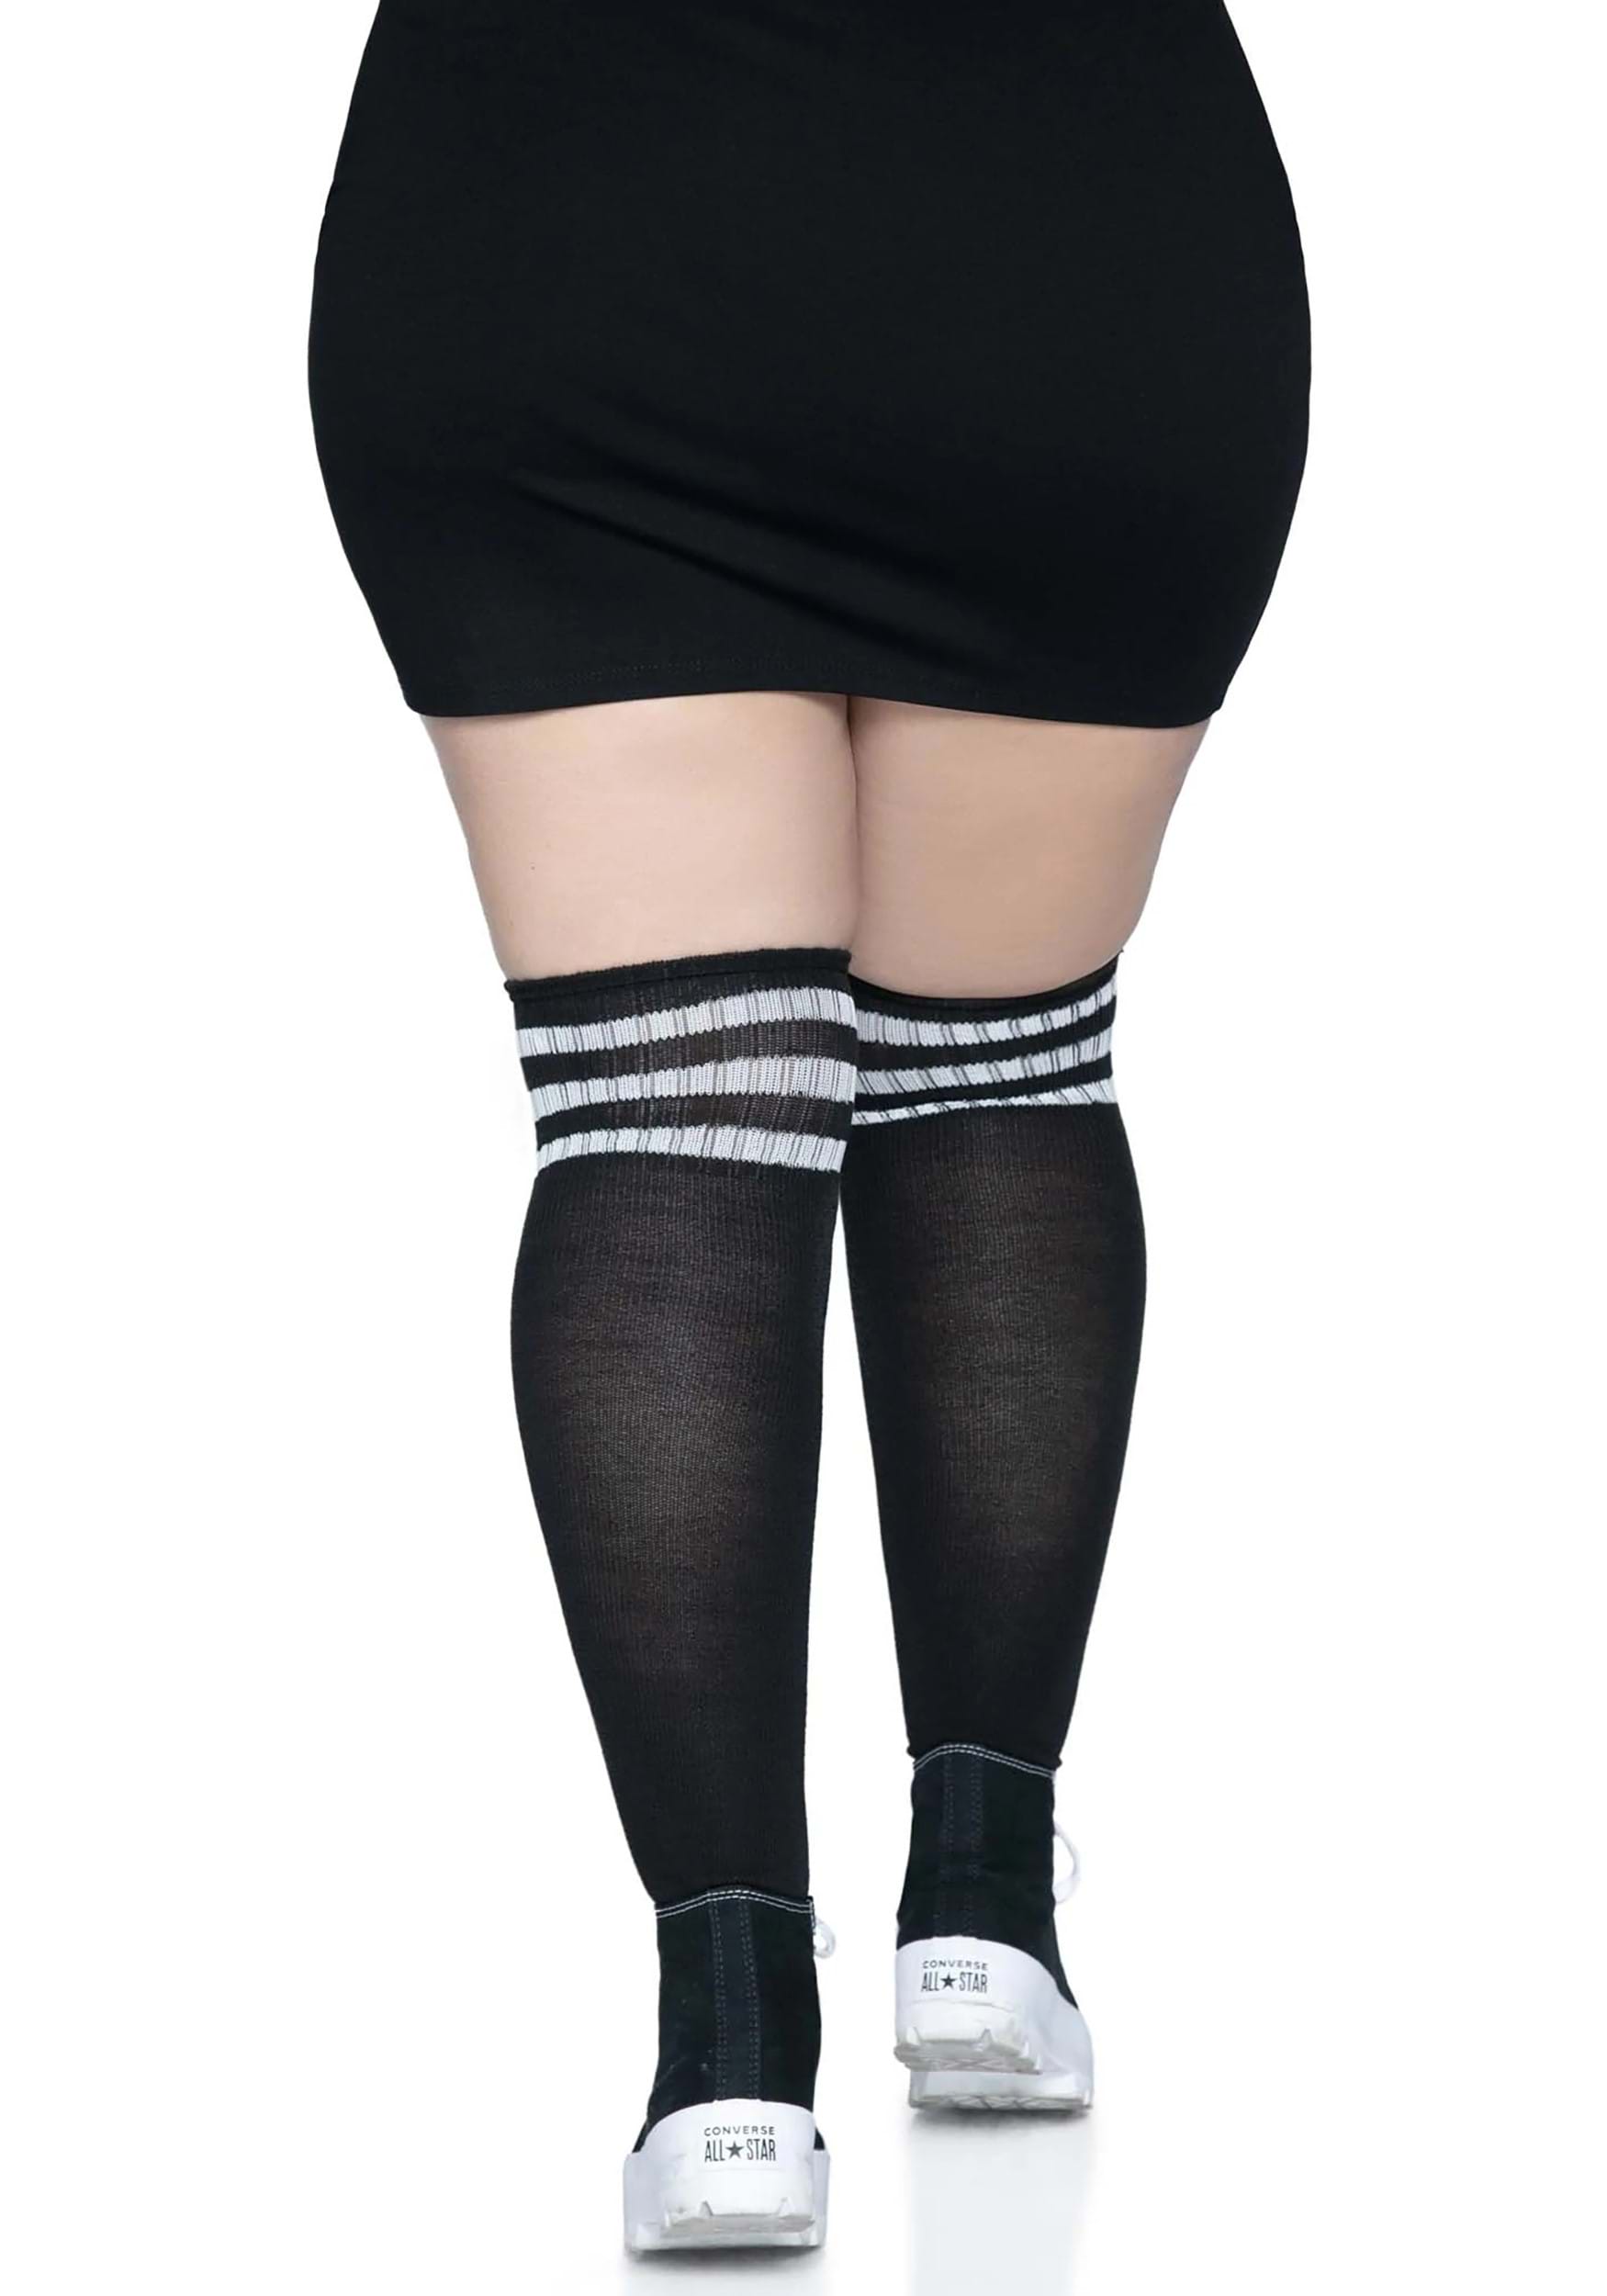 Plus Size Black Athletic Socks With White Stripes